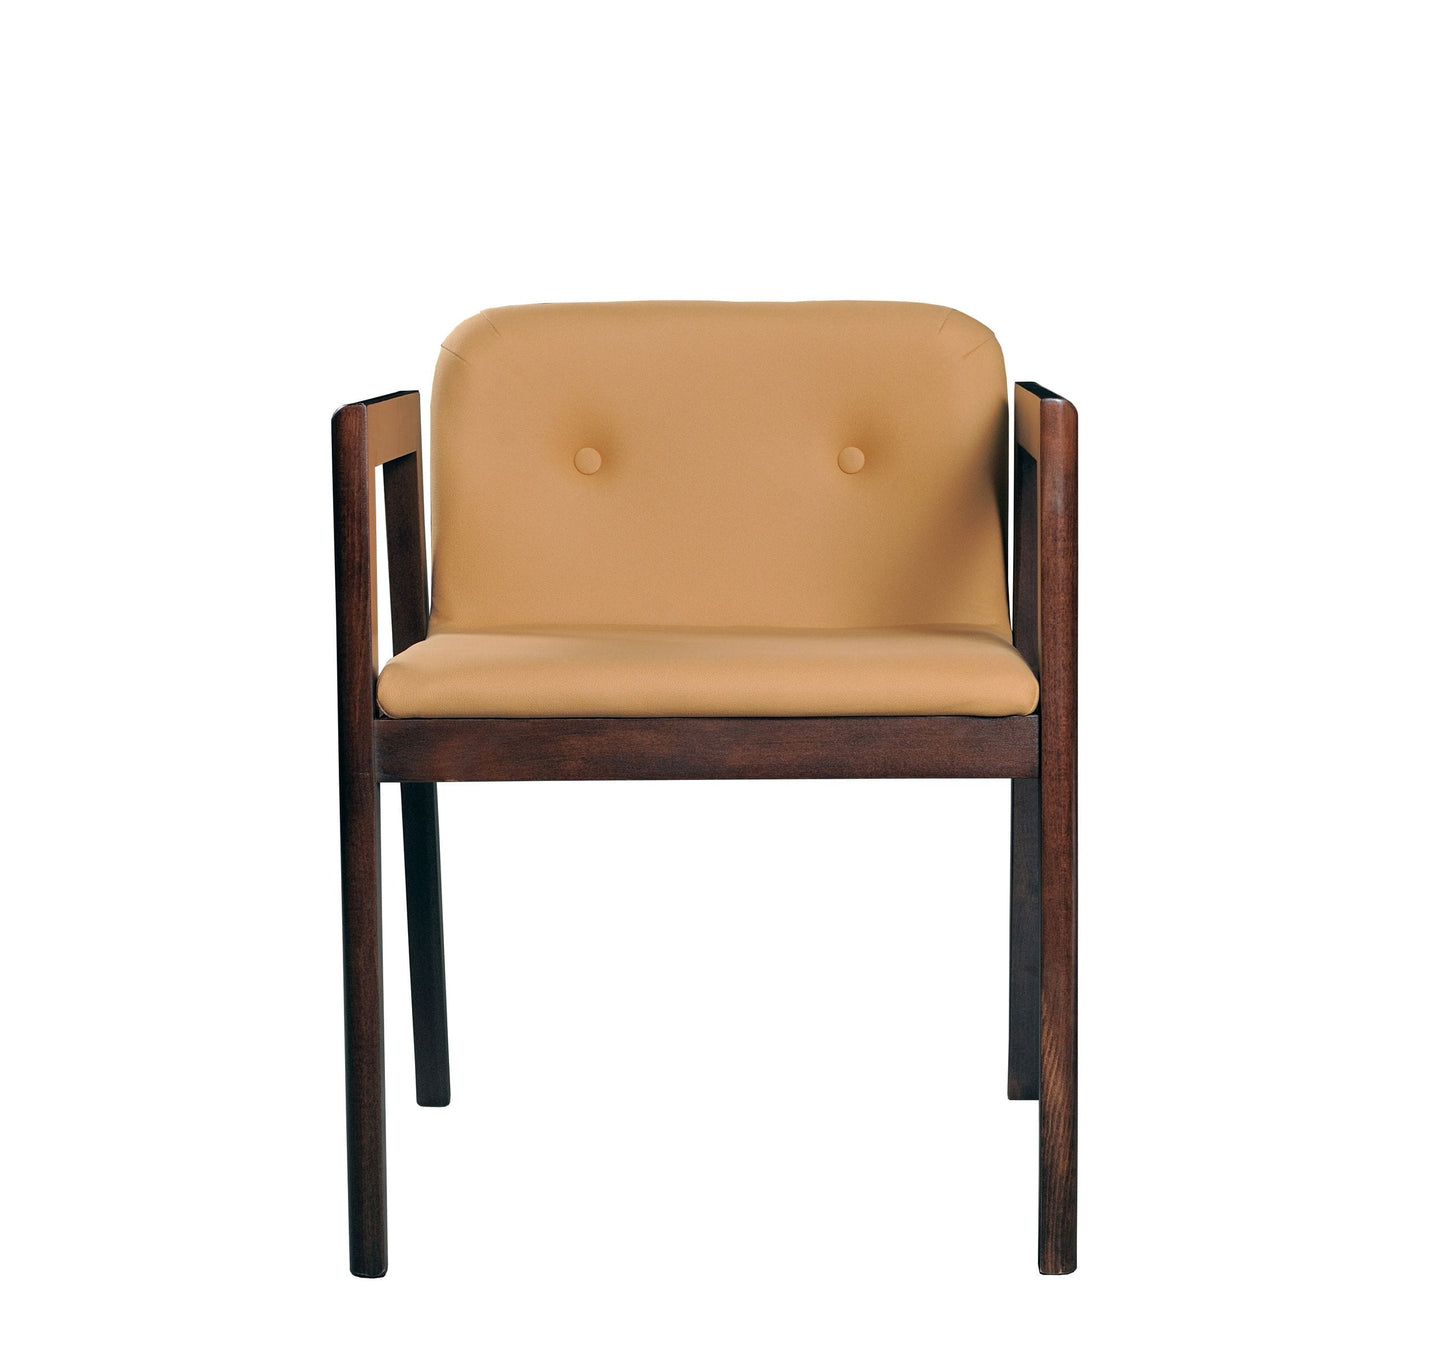 VIG Furniture Modrest Avrum Camel Leather Dining Chair Set of 2